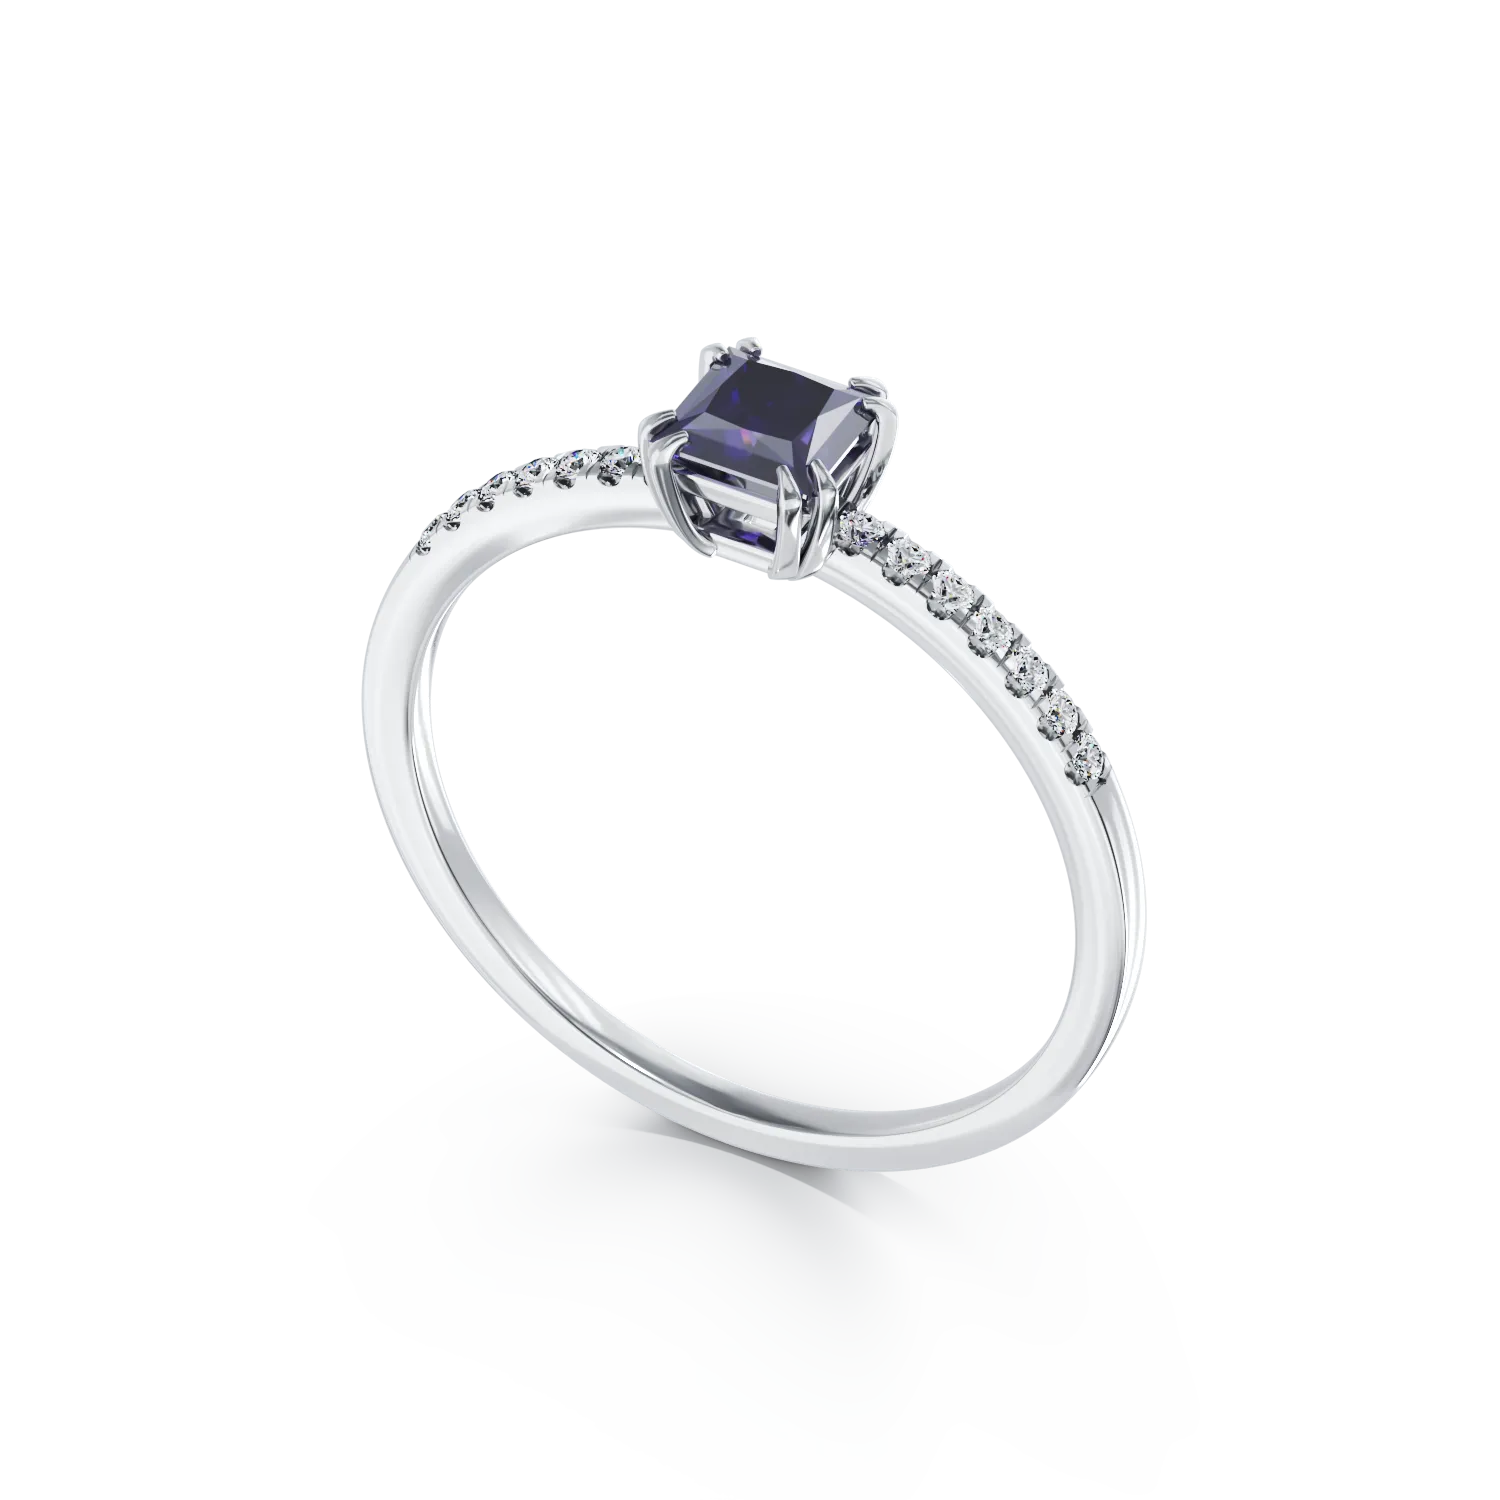 18K white gold engagement ring with 0.38ct tanzanite and 0.05ct diamonds